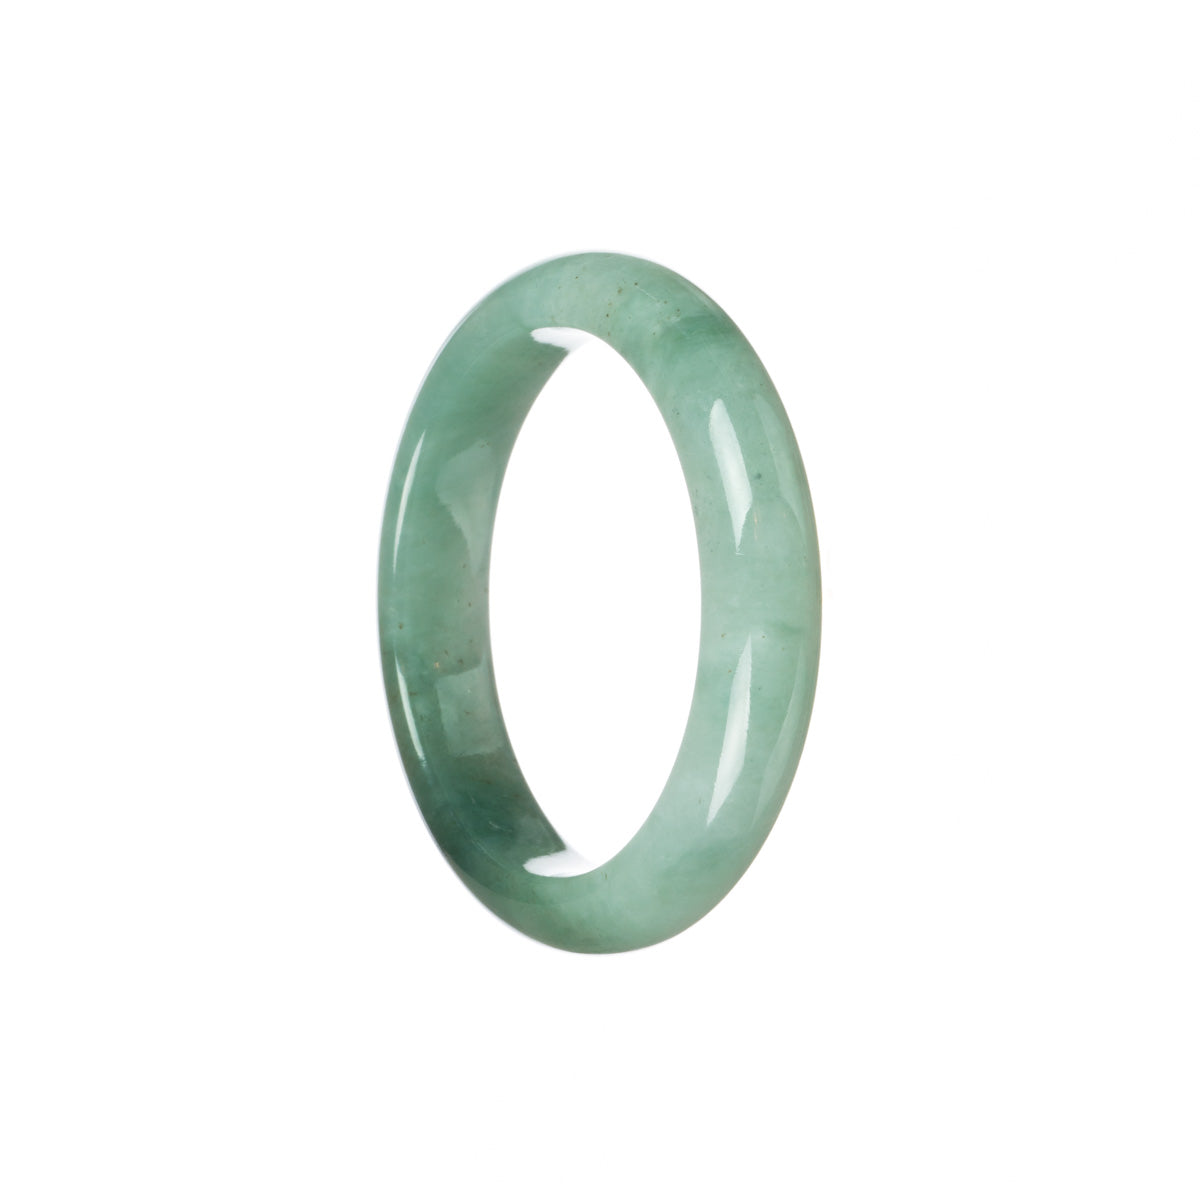 Genuine Grade A Bluish green Burmese Jade Bangle Bracelet - 51mm Half Moon